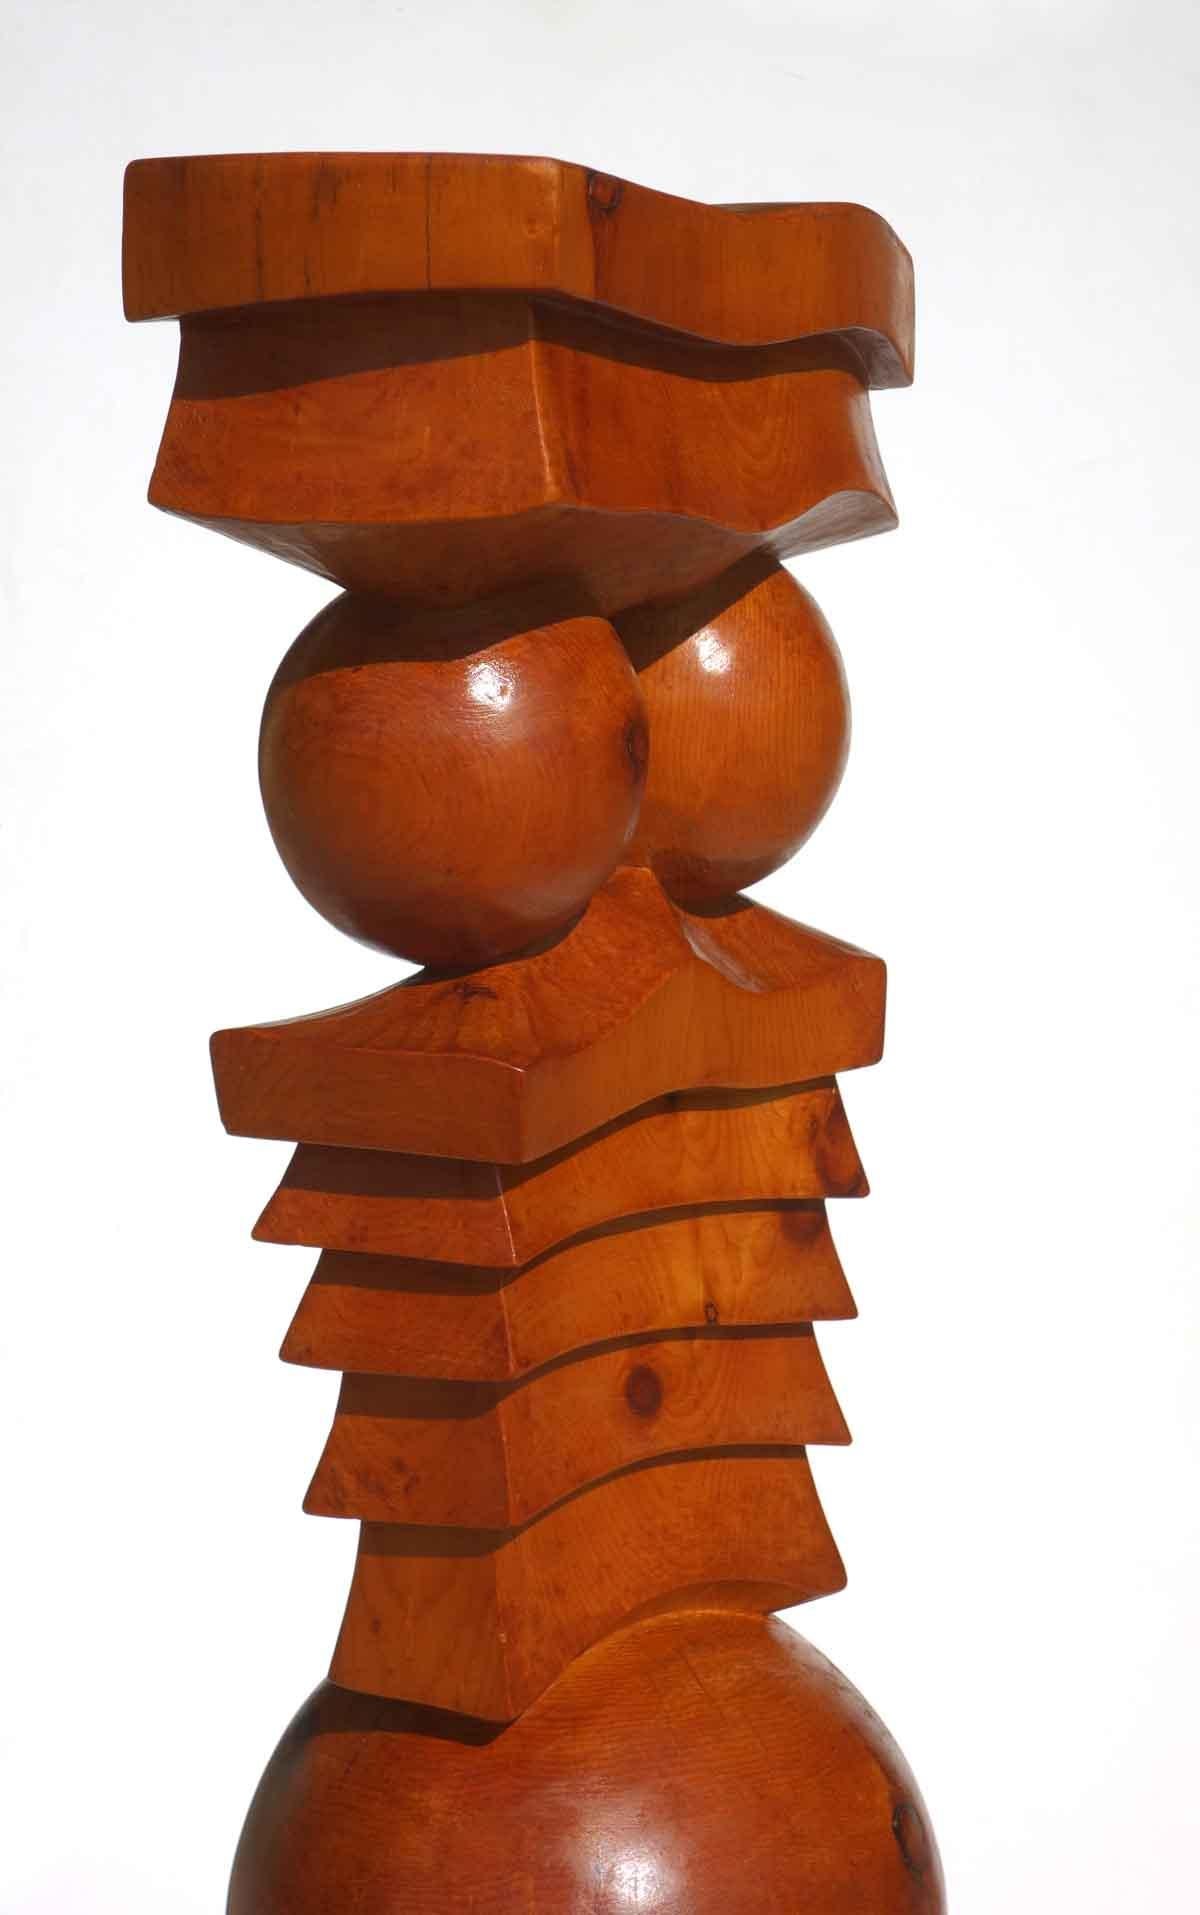 Giampiero Pazzola, Italy, 1980s
Big wood sculpture.